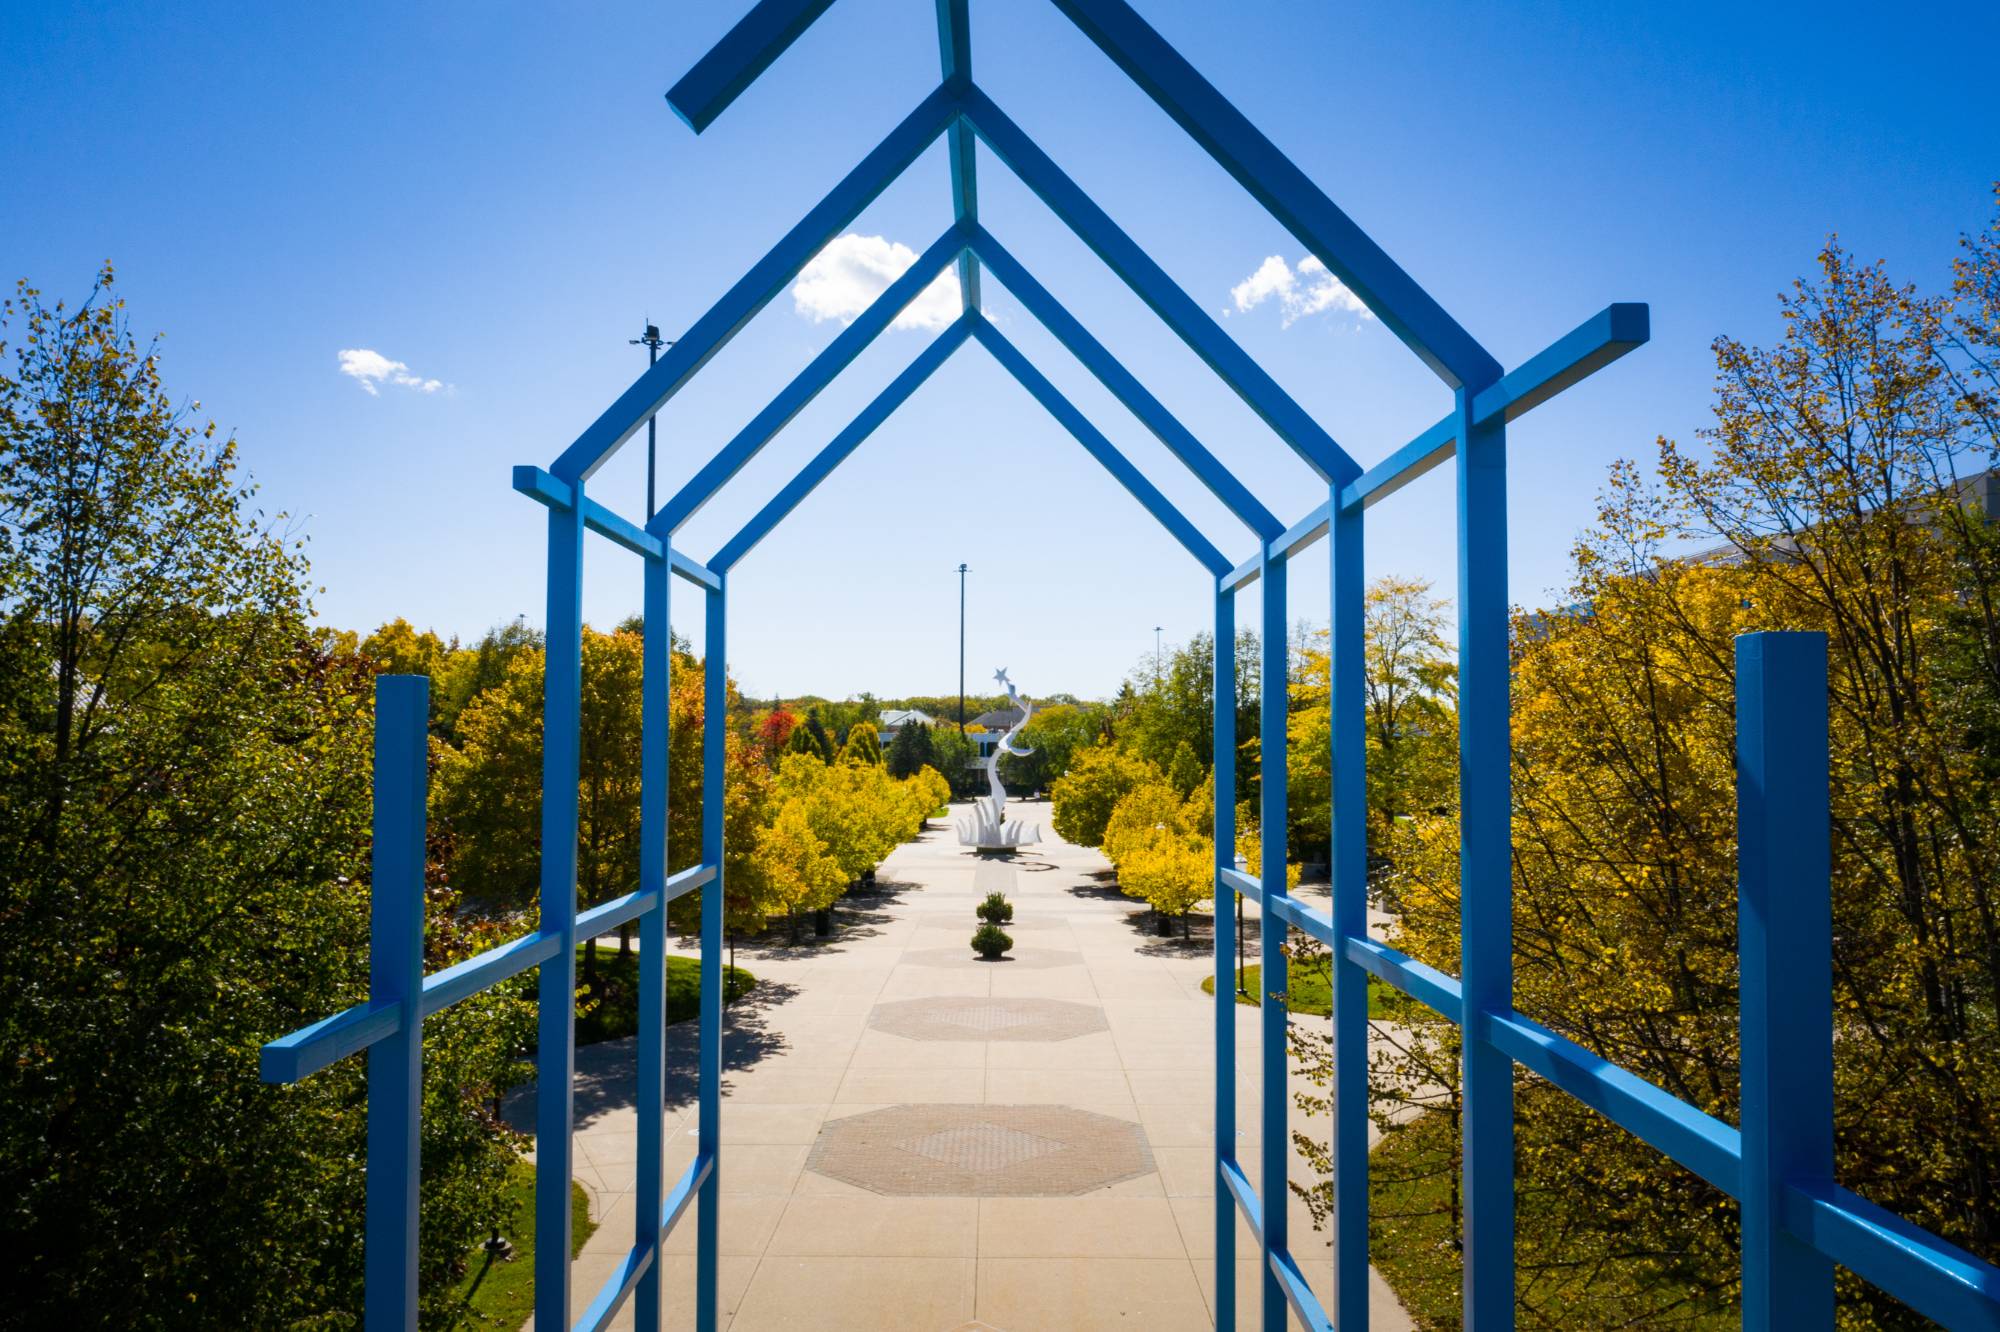 transformational link sculpture, 40 foot tall blue steel arch